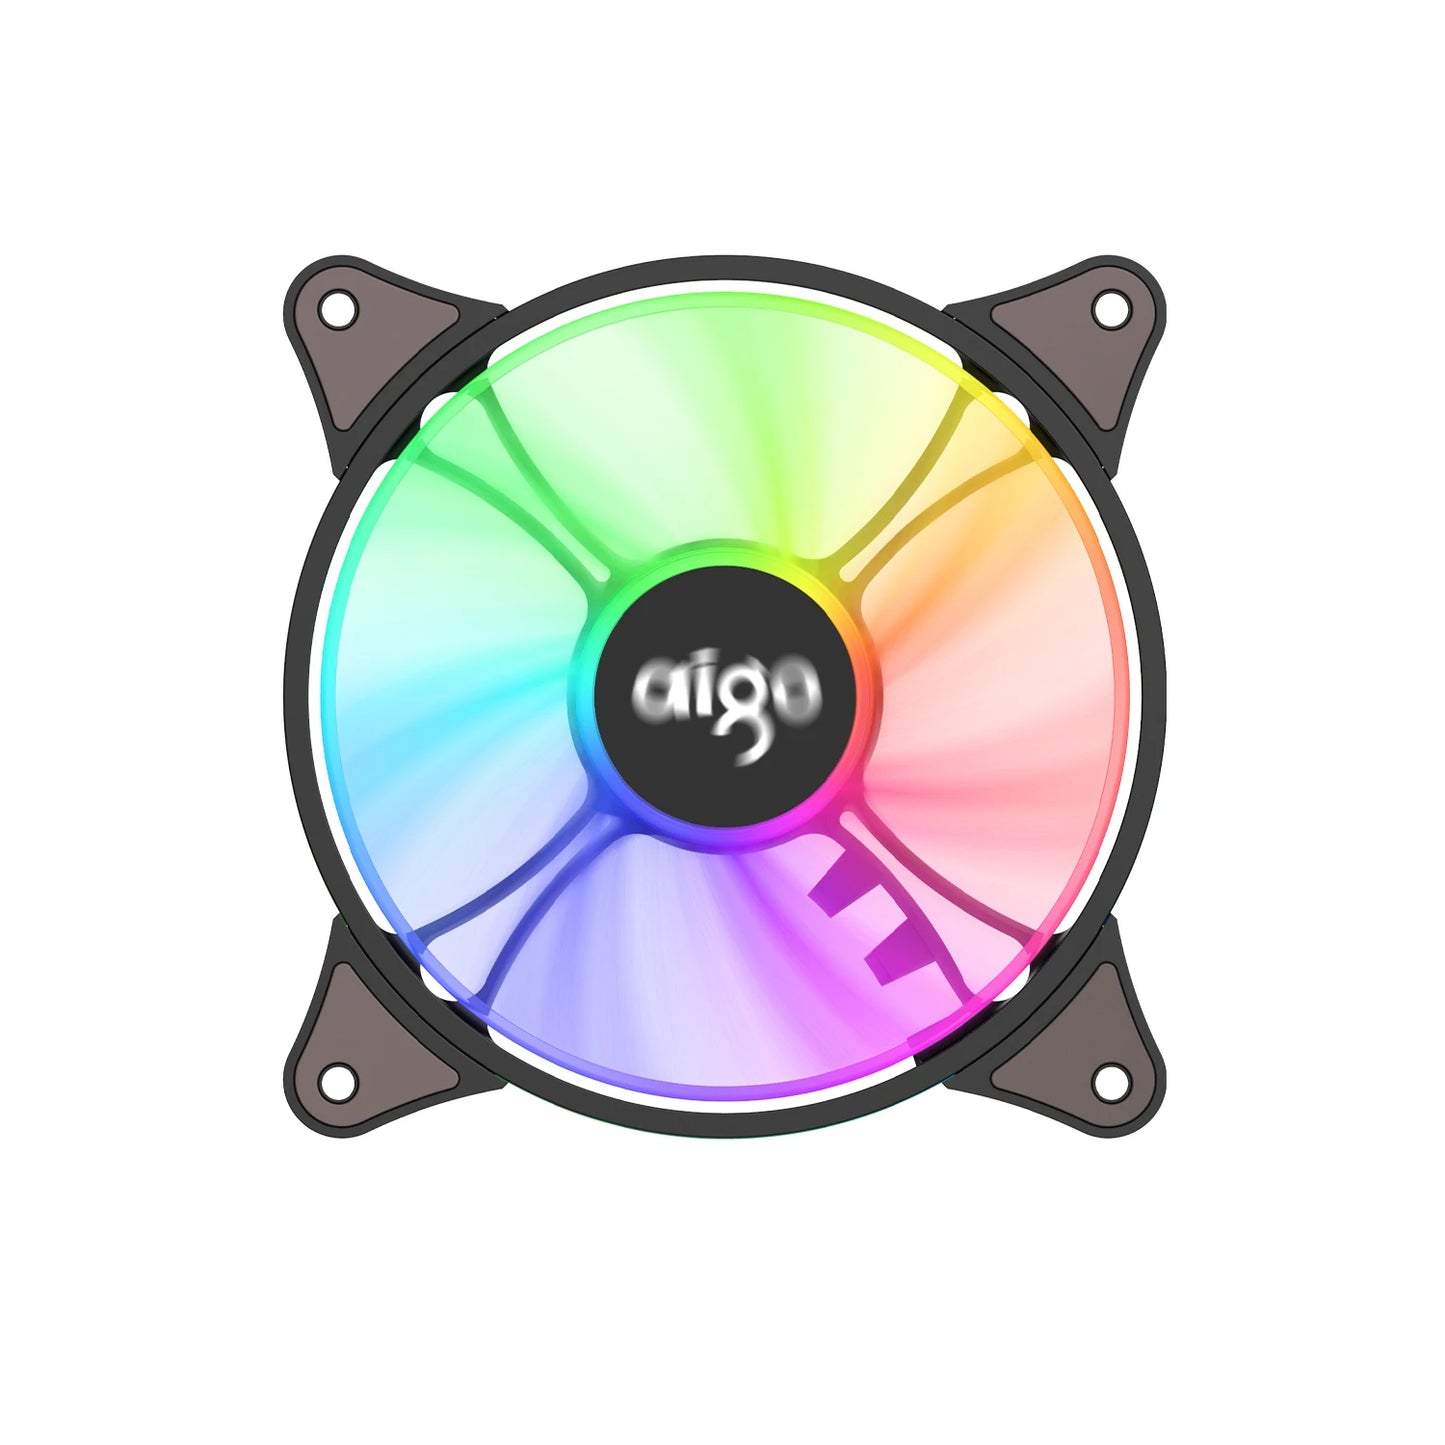 Aigo AR12 120mm pc computer Case Fan RGB Heatsink aura sync sata port 12cm Cooler argb Silent controller fan cooling ventilador